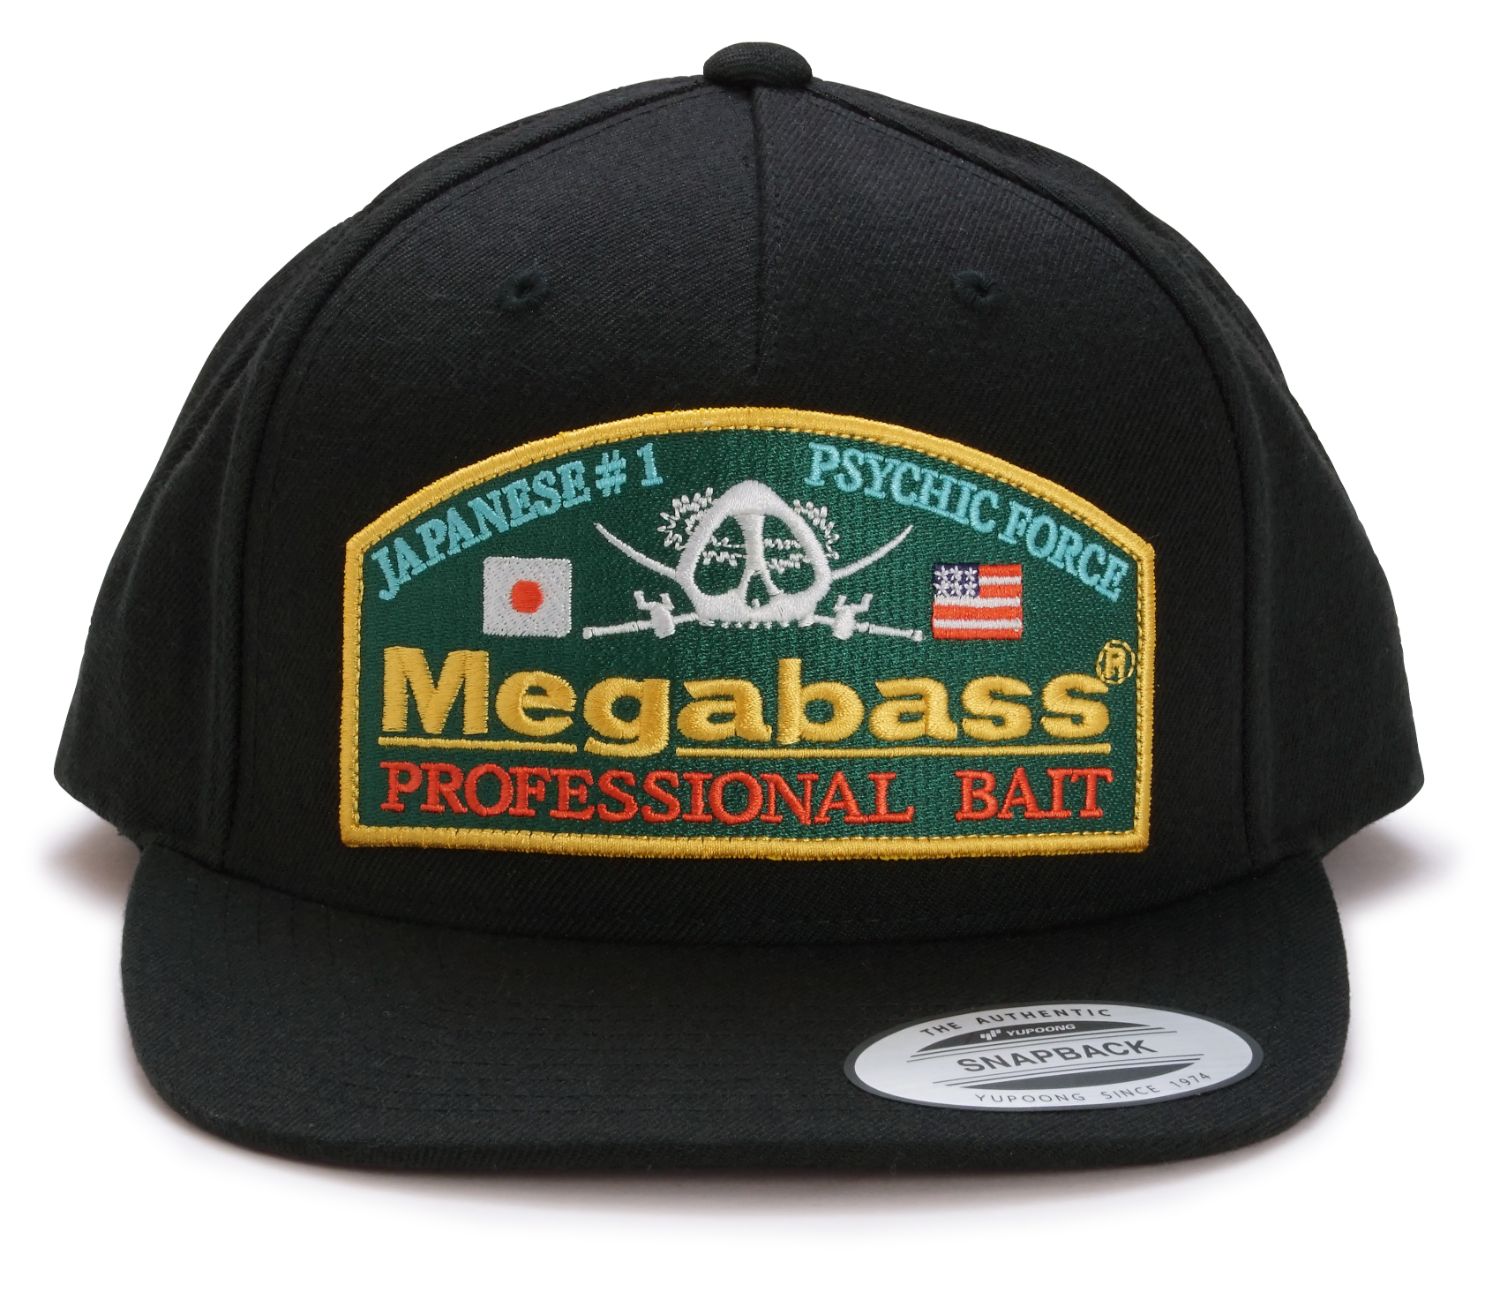 Megabass Psychic Snapback - Black / Green